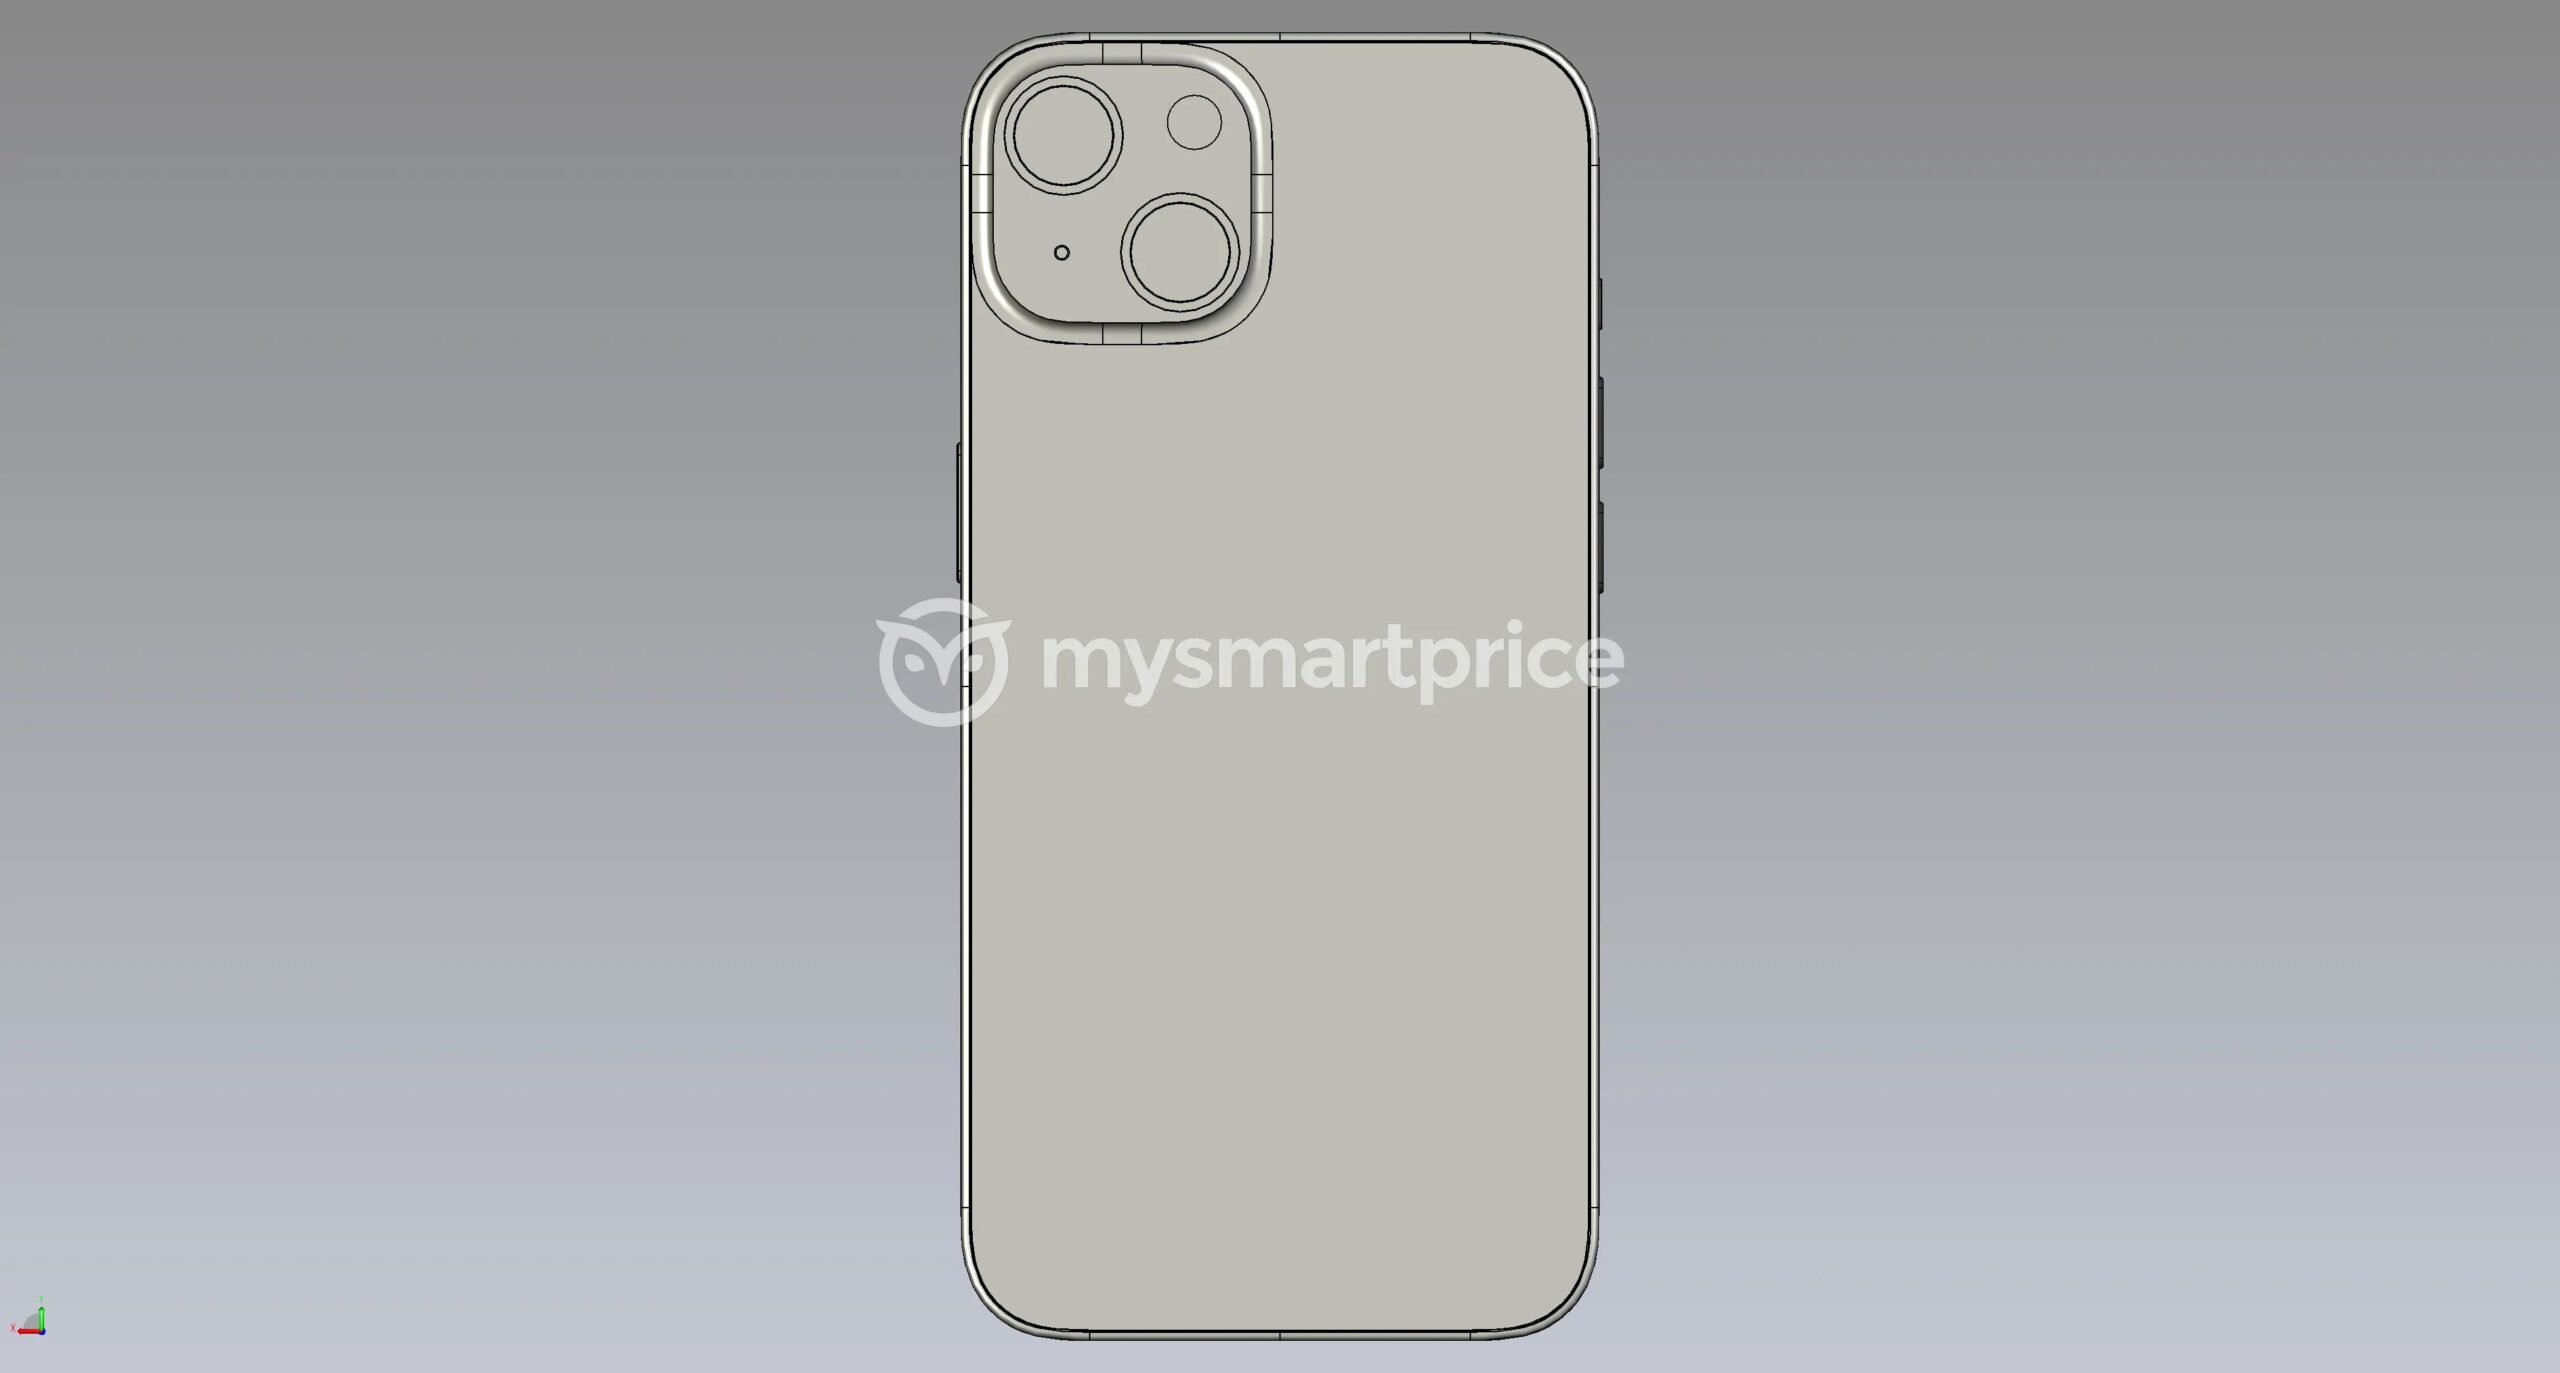 iPhone 14 CAD模型圖曝光，外觀設計看不出來有變化？